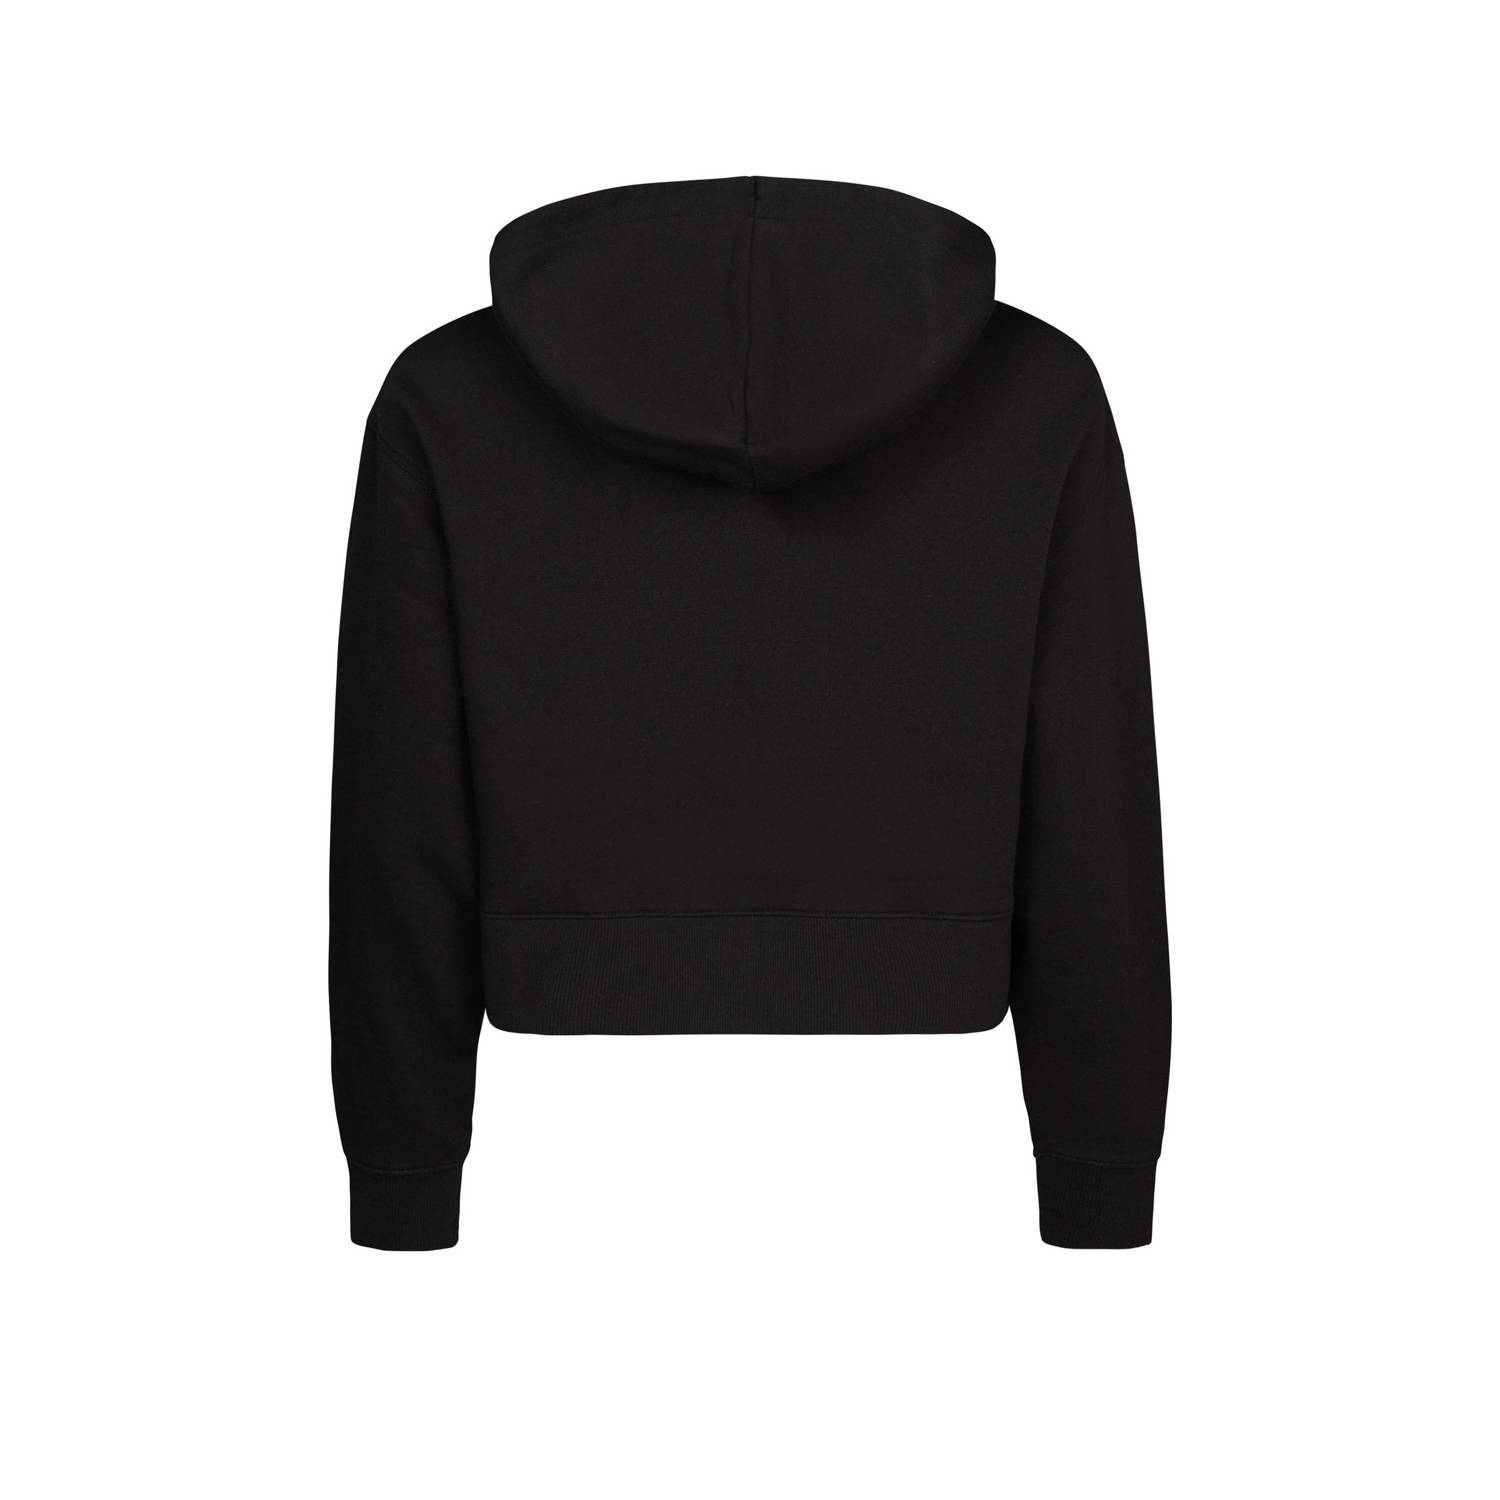 Timberland hoodie met tekst zwart